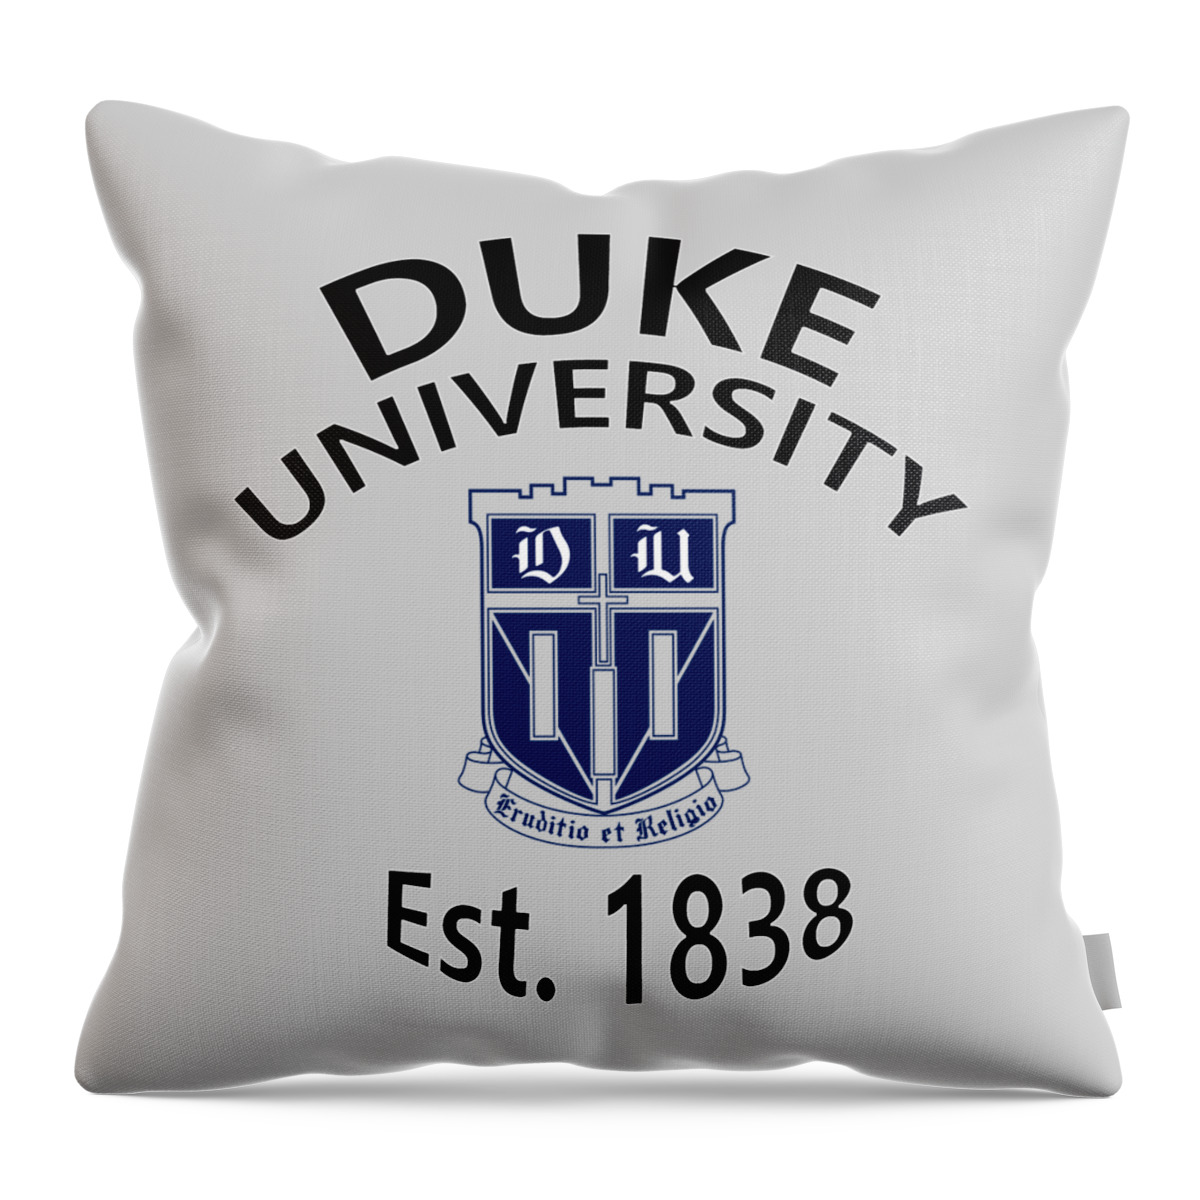 Duke University Throw Pillow featuring the digital art Duke University Est 1838 by Movie Poster Prints